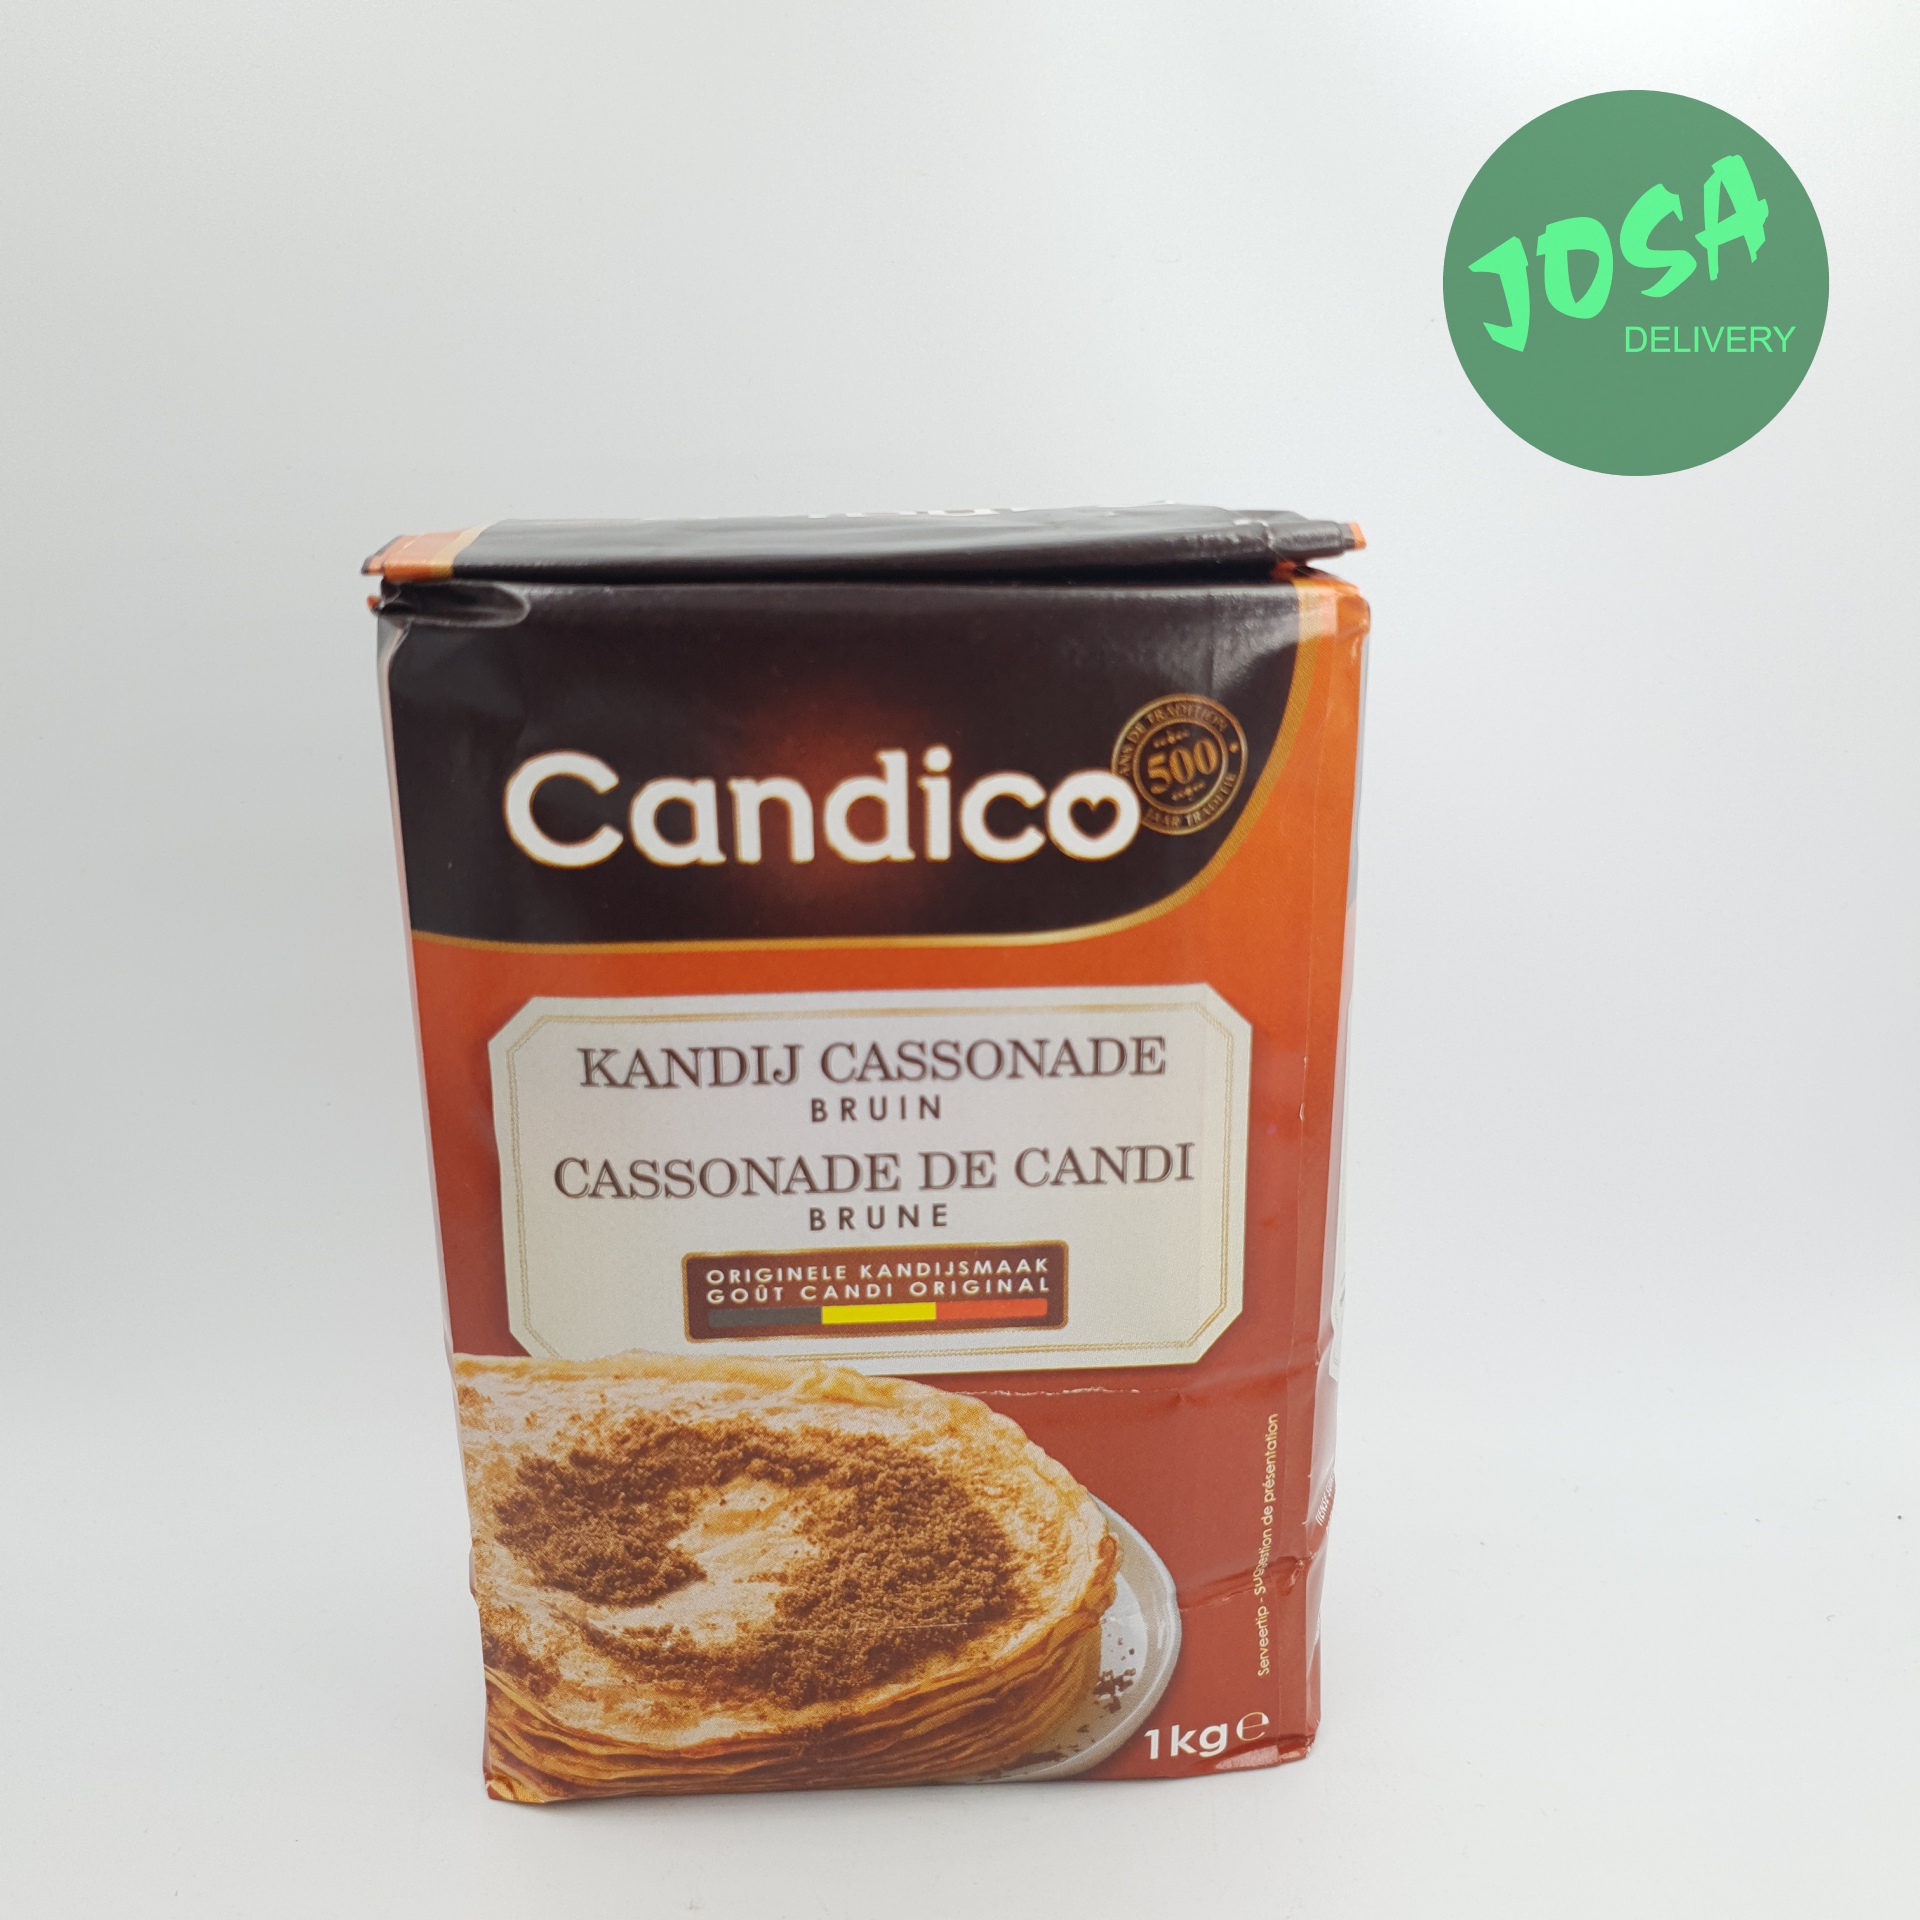 Cassonade de candi brune foncé 2kg Candico - Nevejan